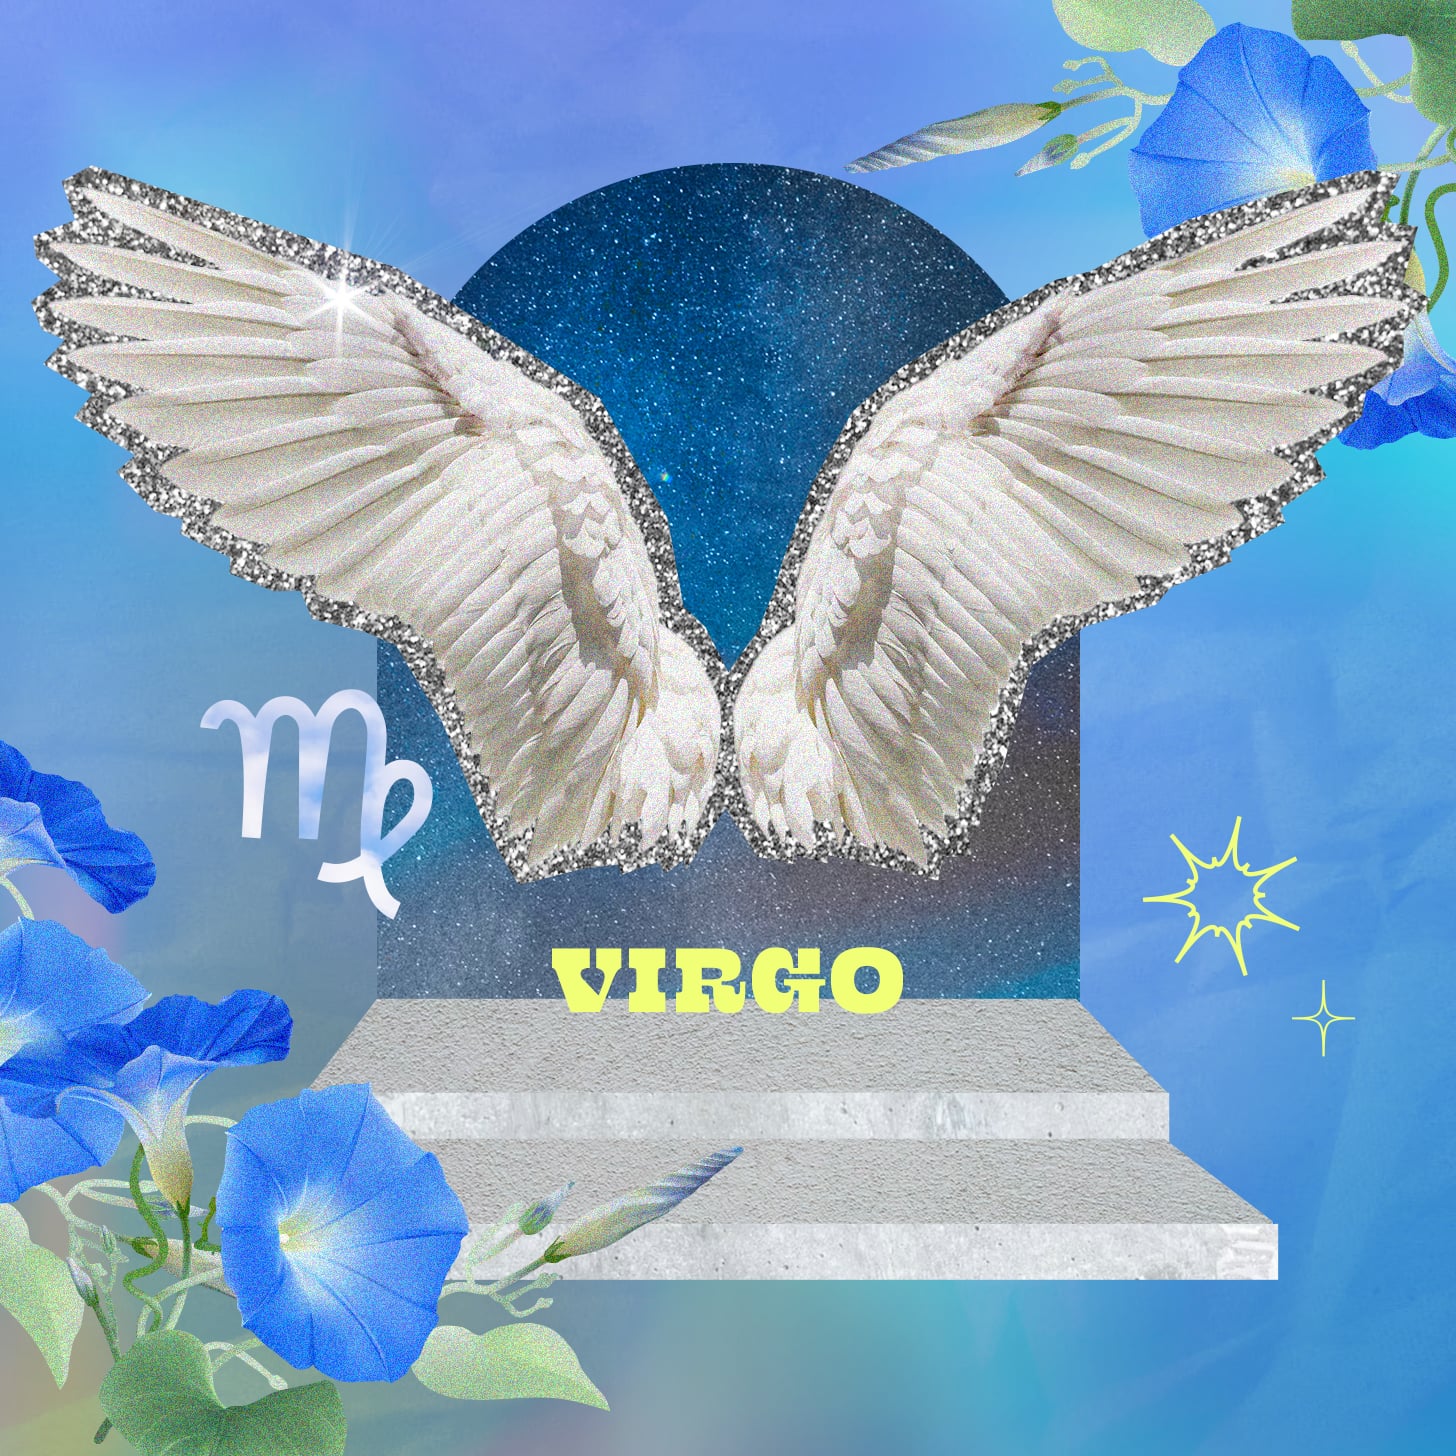 Virgo weekly horoscope for July 3 2022